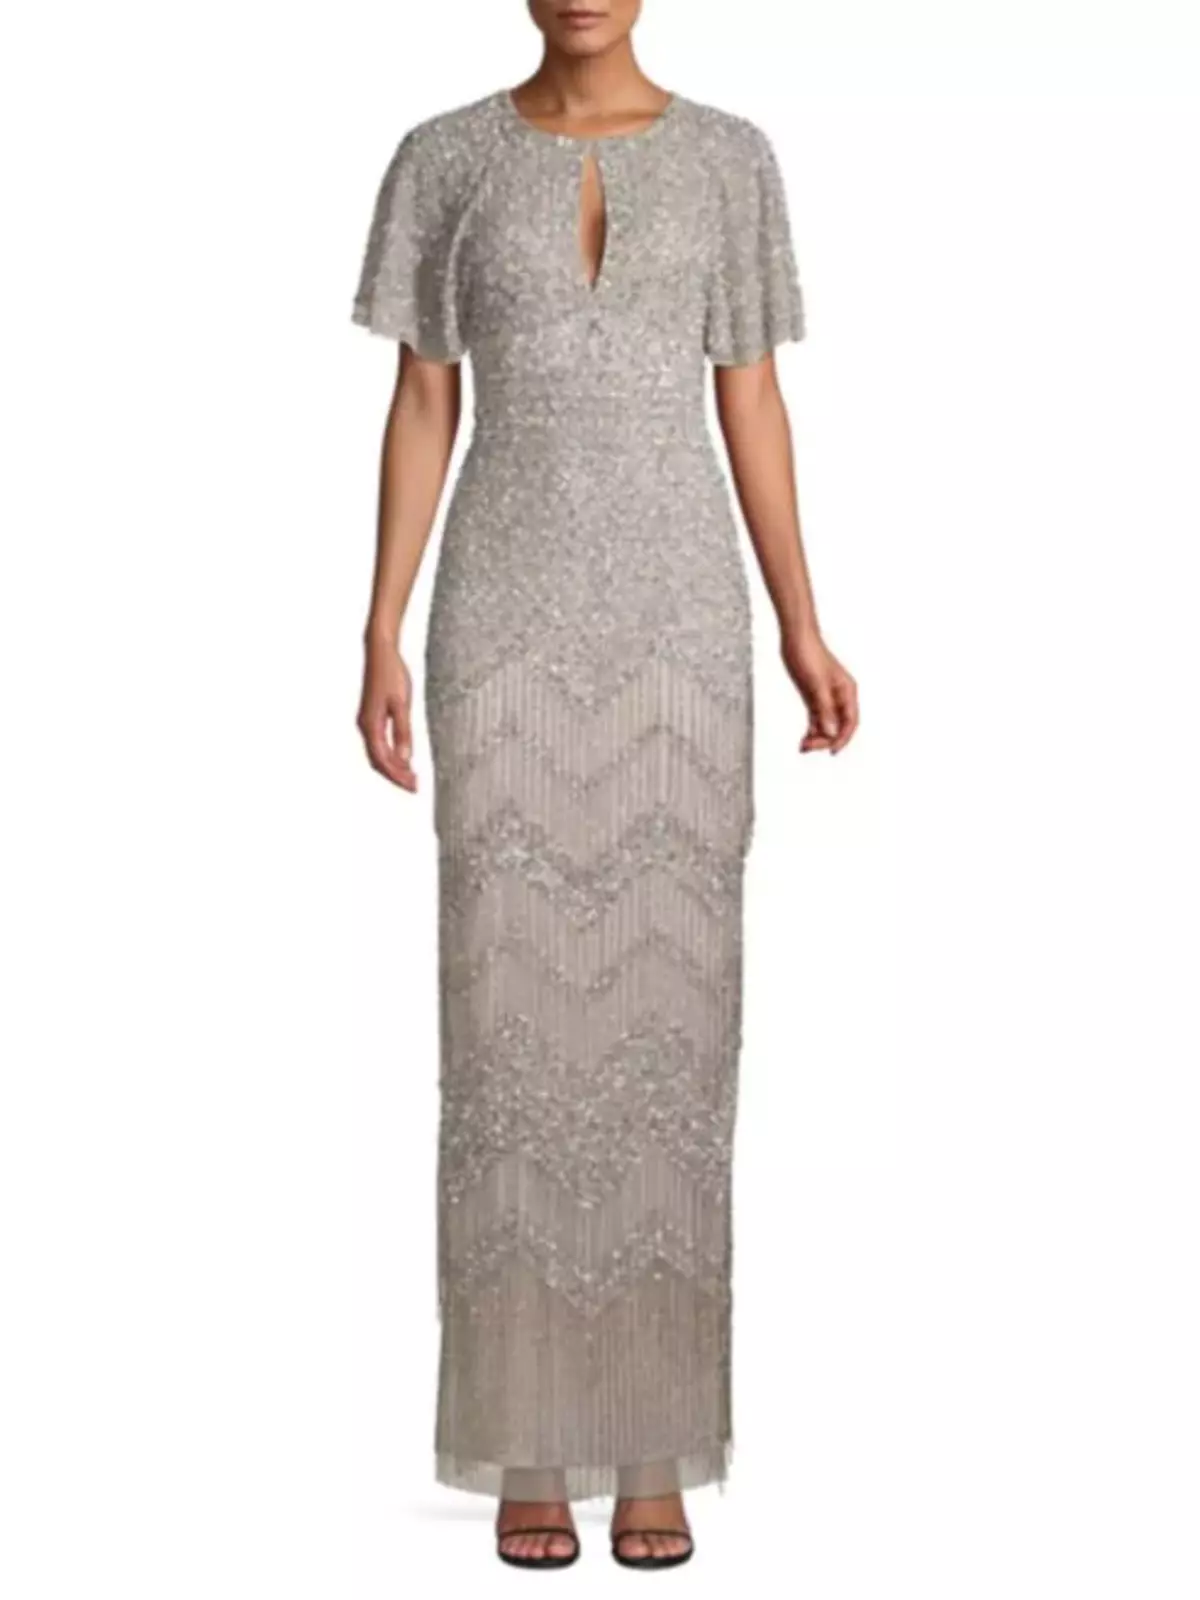 LANA DEL REY קנה שמלה עבור גראמי במרכז הקניות רק 600 דולר 105466_3